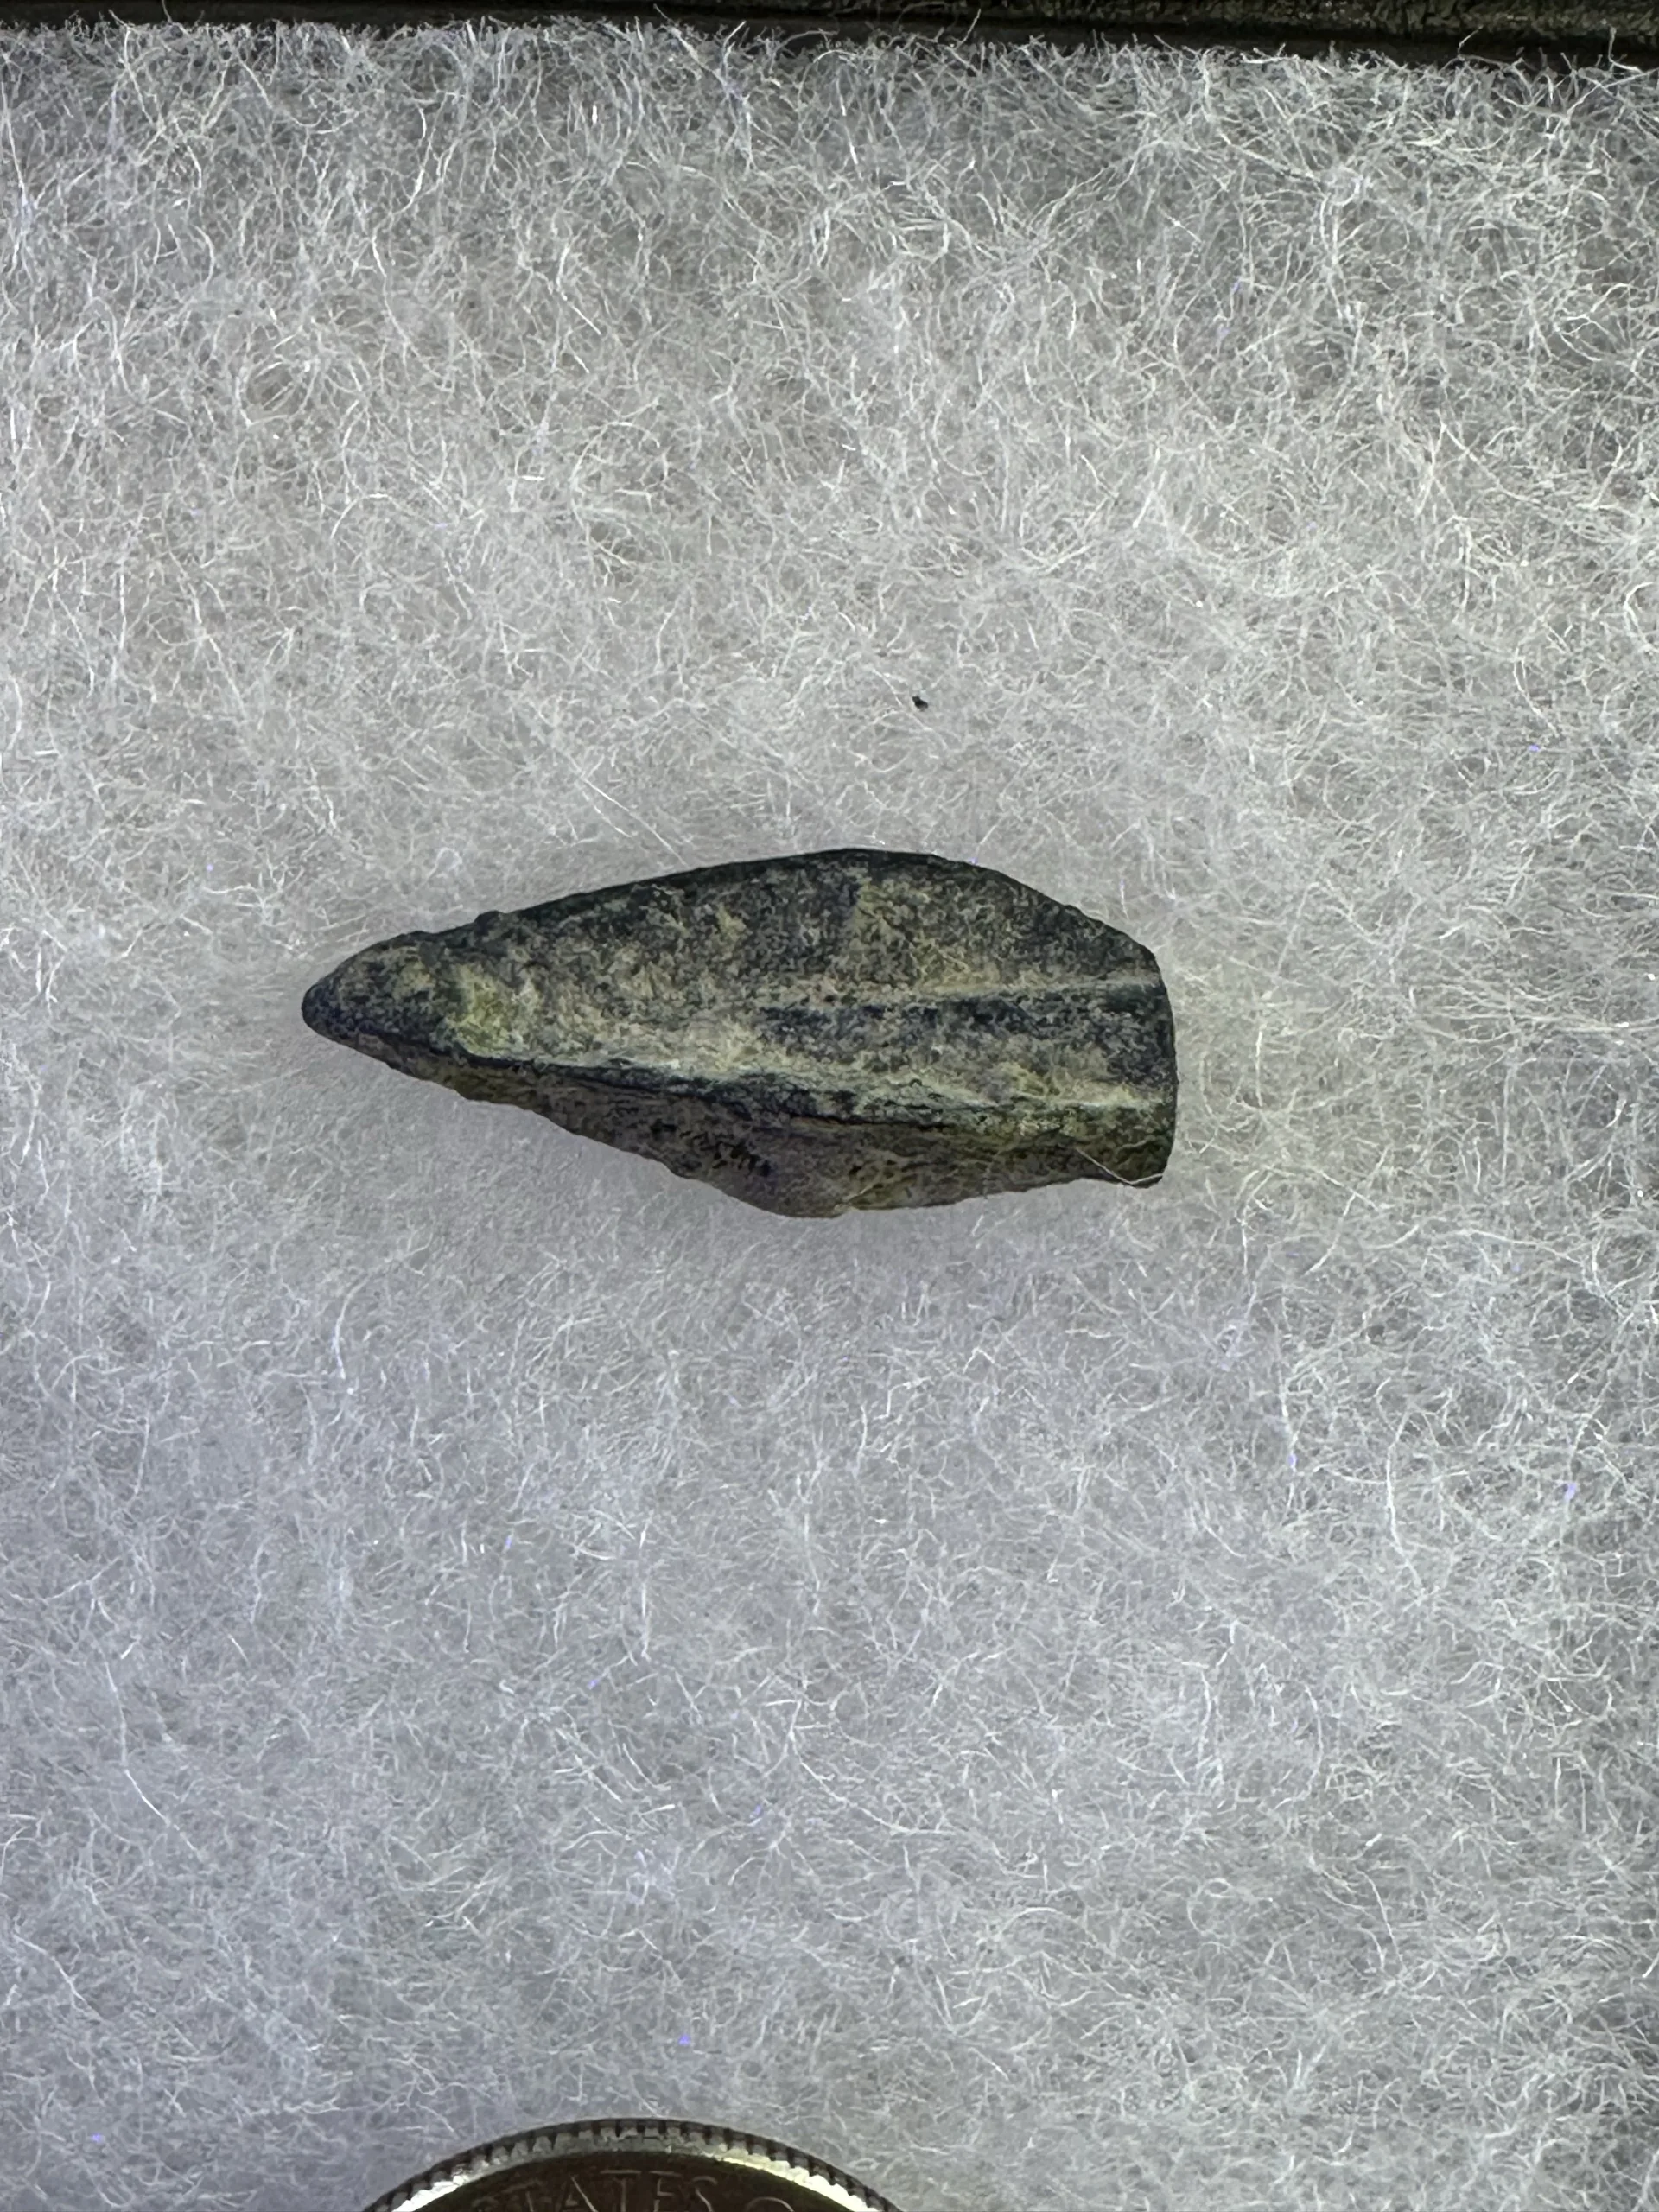 Bronze Roman Arrowhead, 360 degree beauty, 100AD Prehistoric Online